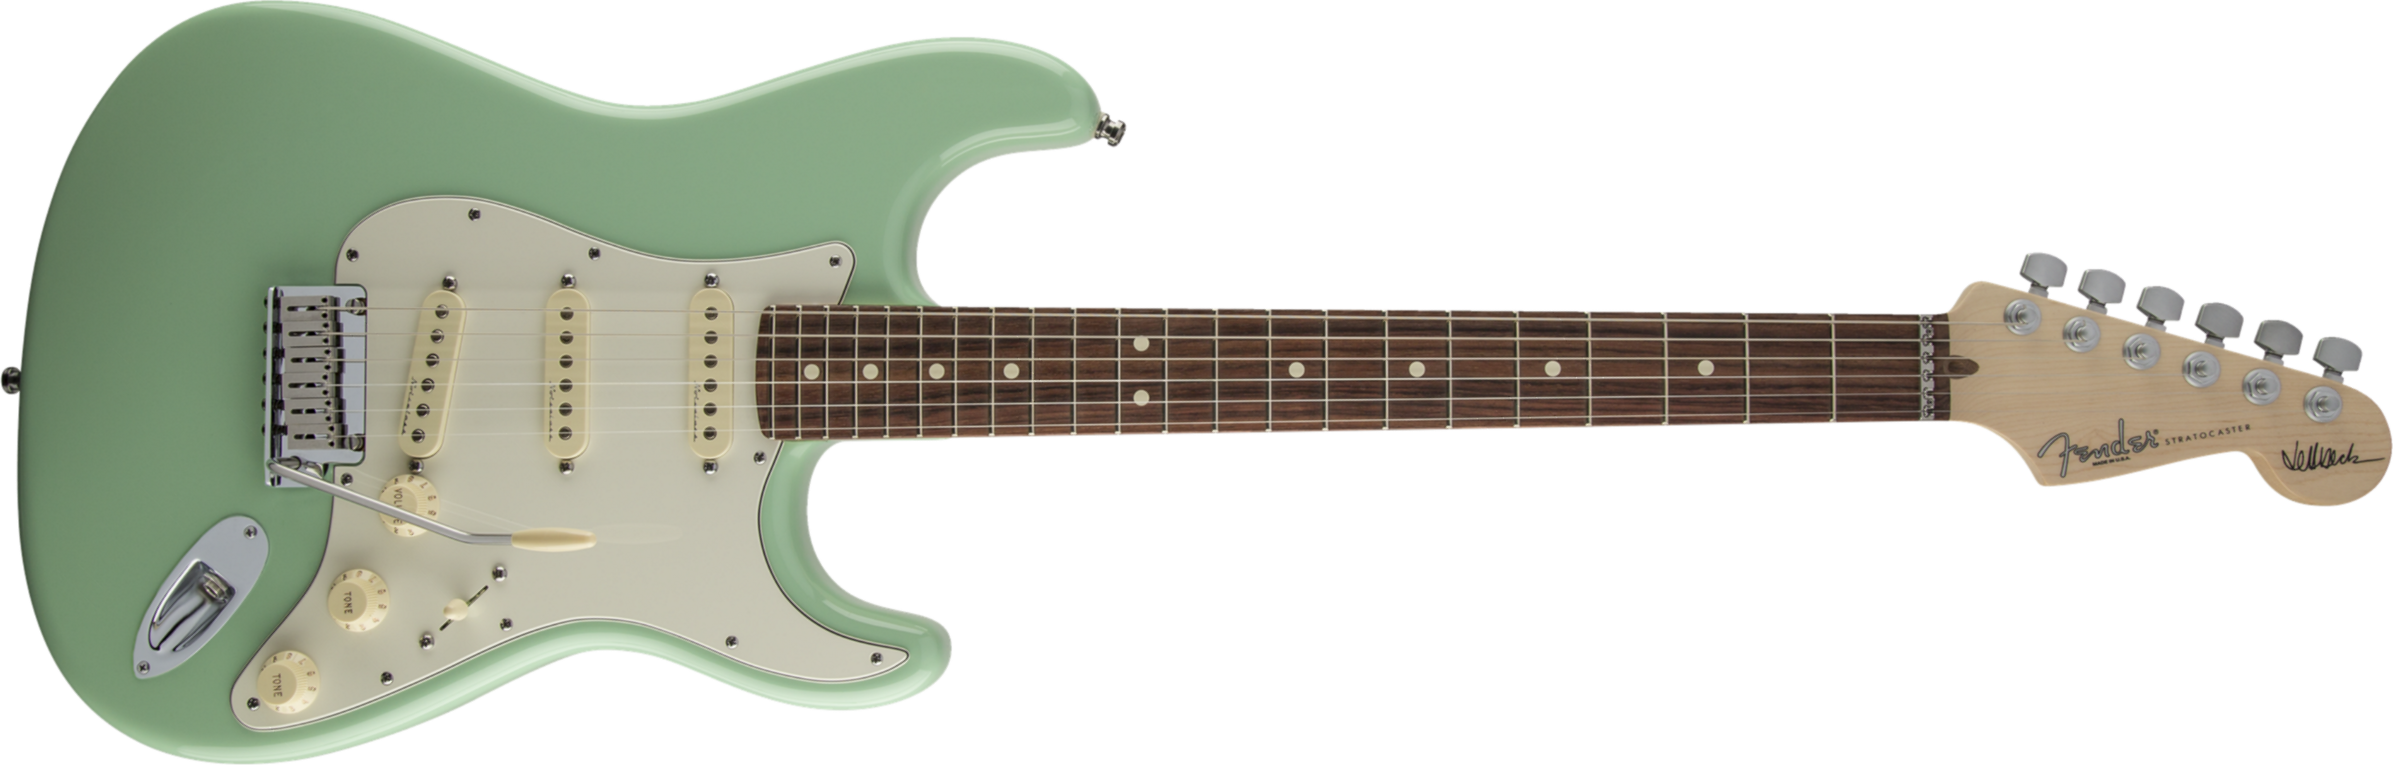 Fender Stratocaster Jeff Beck - Surf Green - Guitare Électrique Forme Str - Main picture